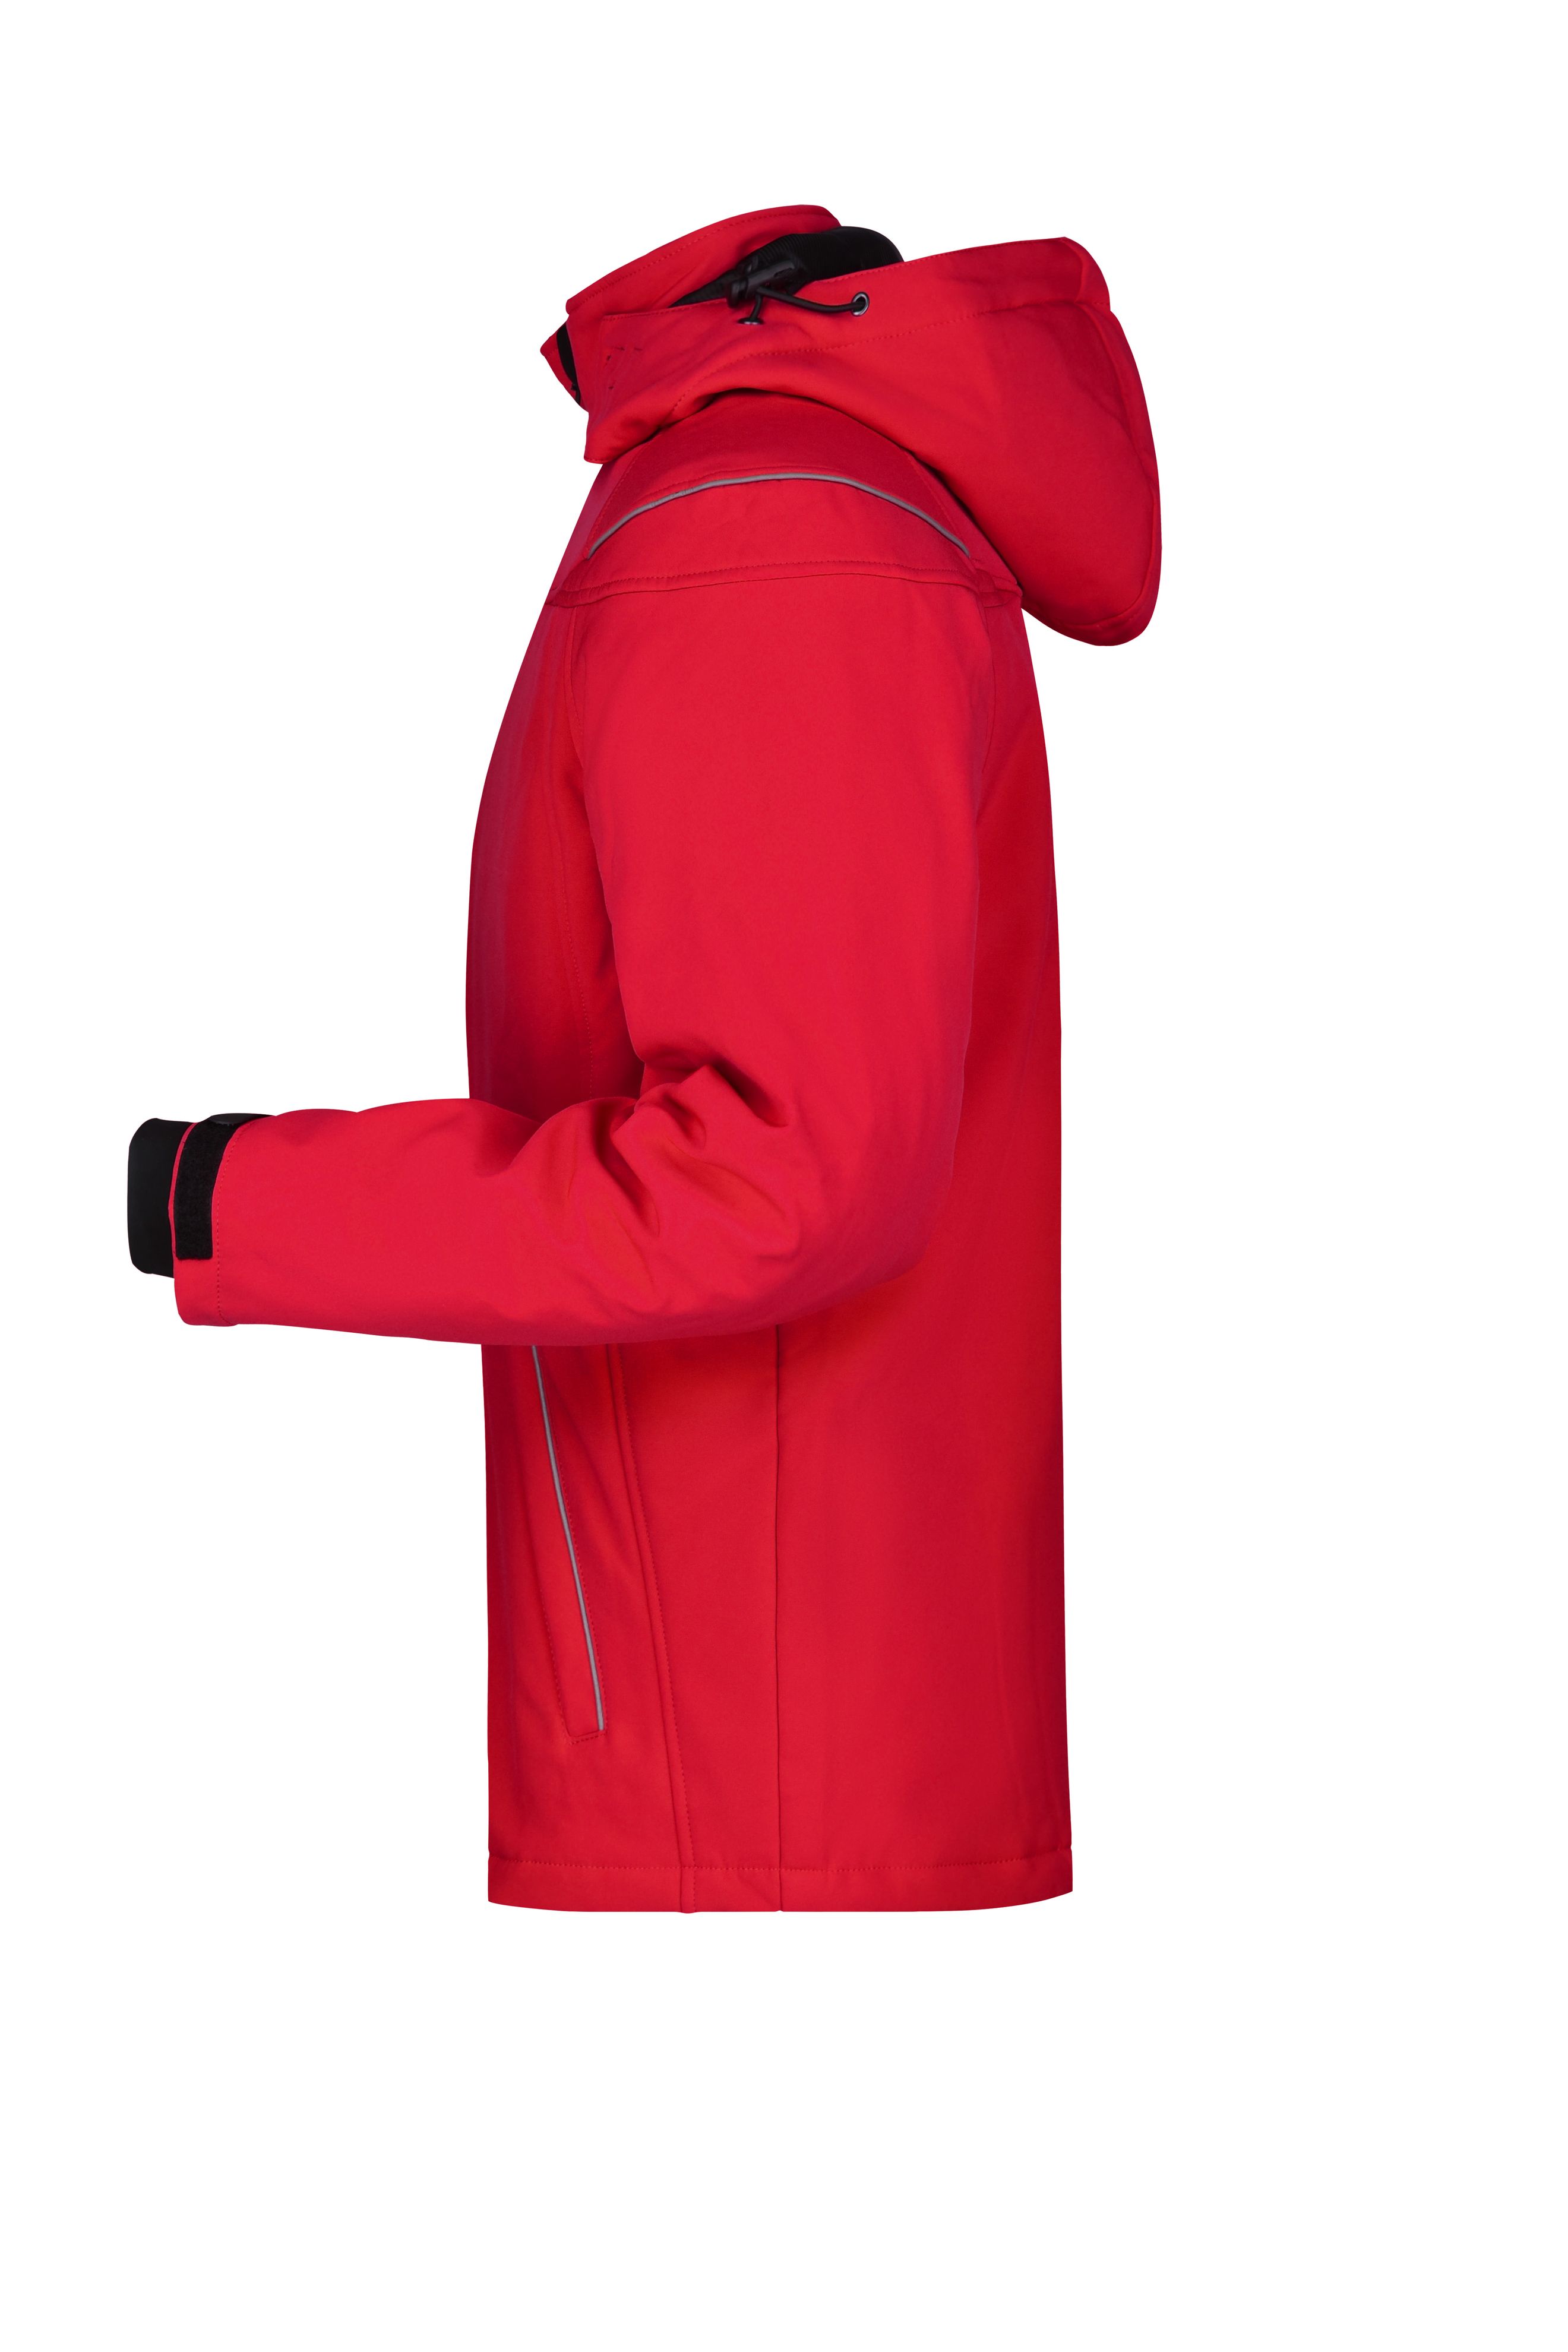 Men’s Winter Softshell Jacket JN1000 Modische Winter Softshelljacke